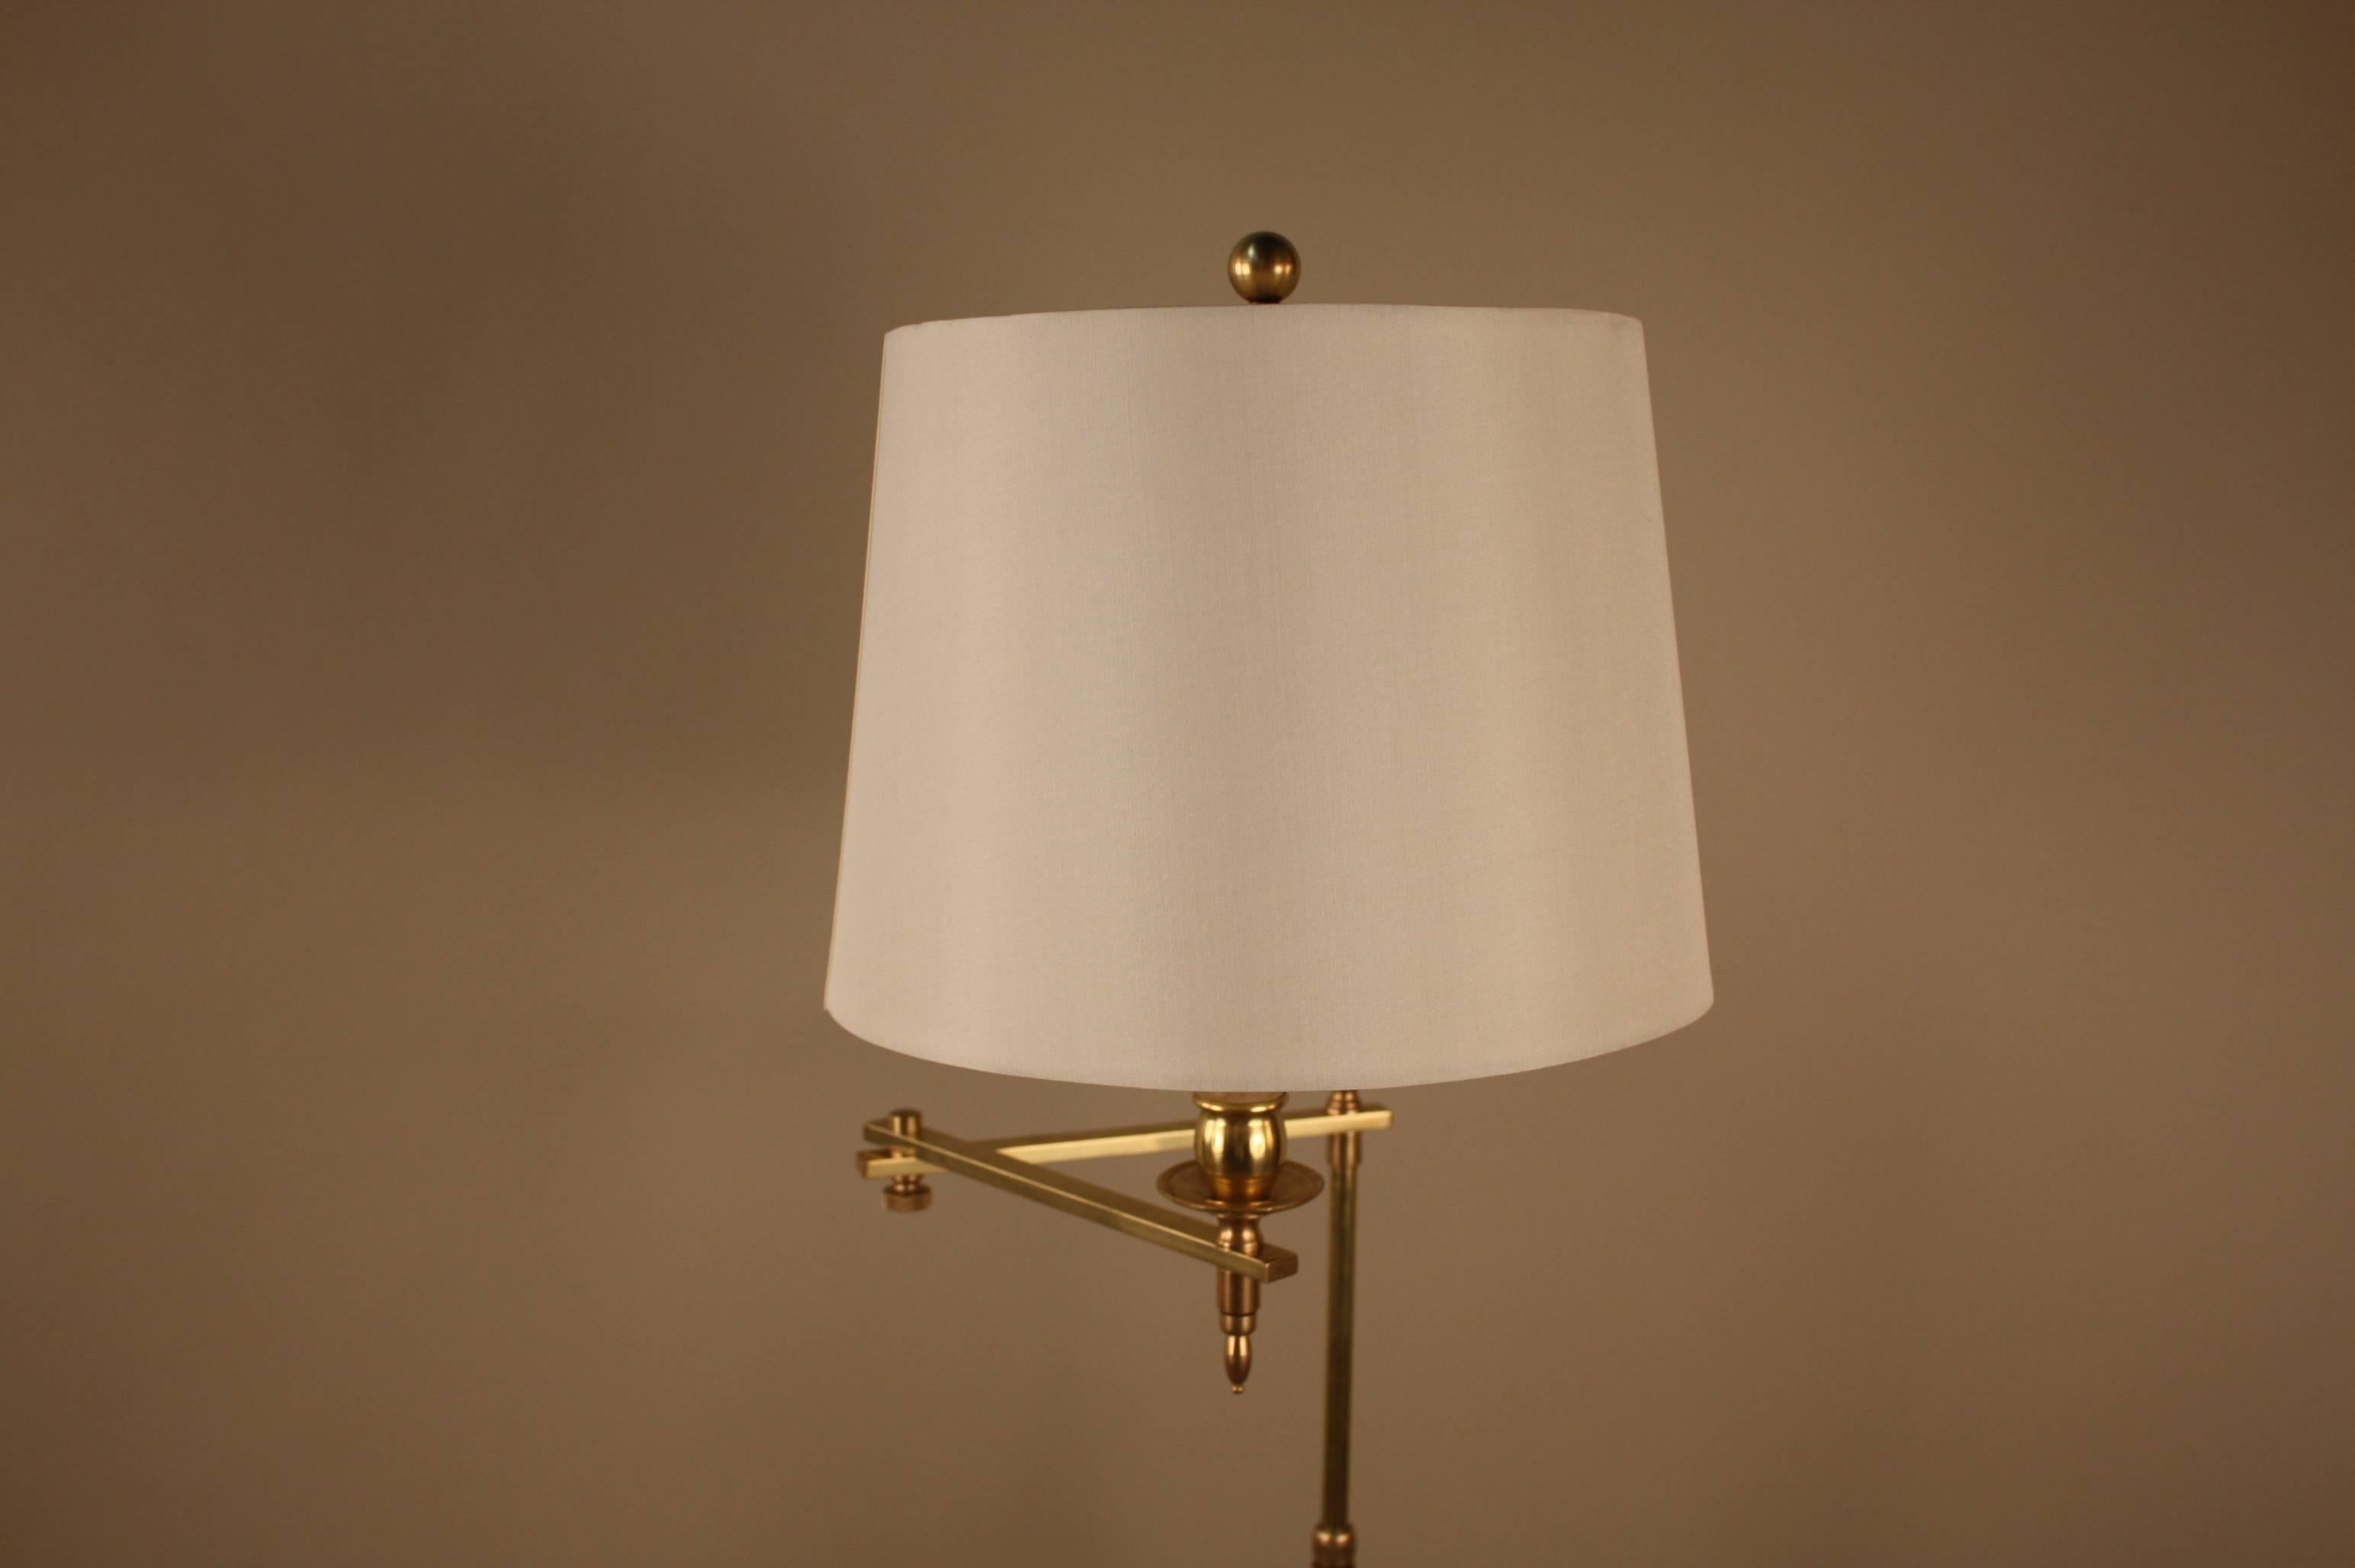 Simple but elegant swing arm adjustable height bronze floor lamp.
Height is 58